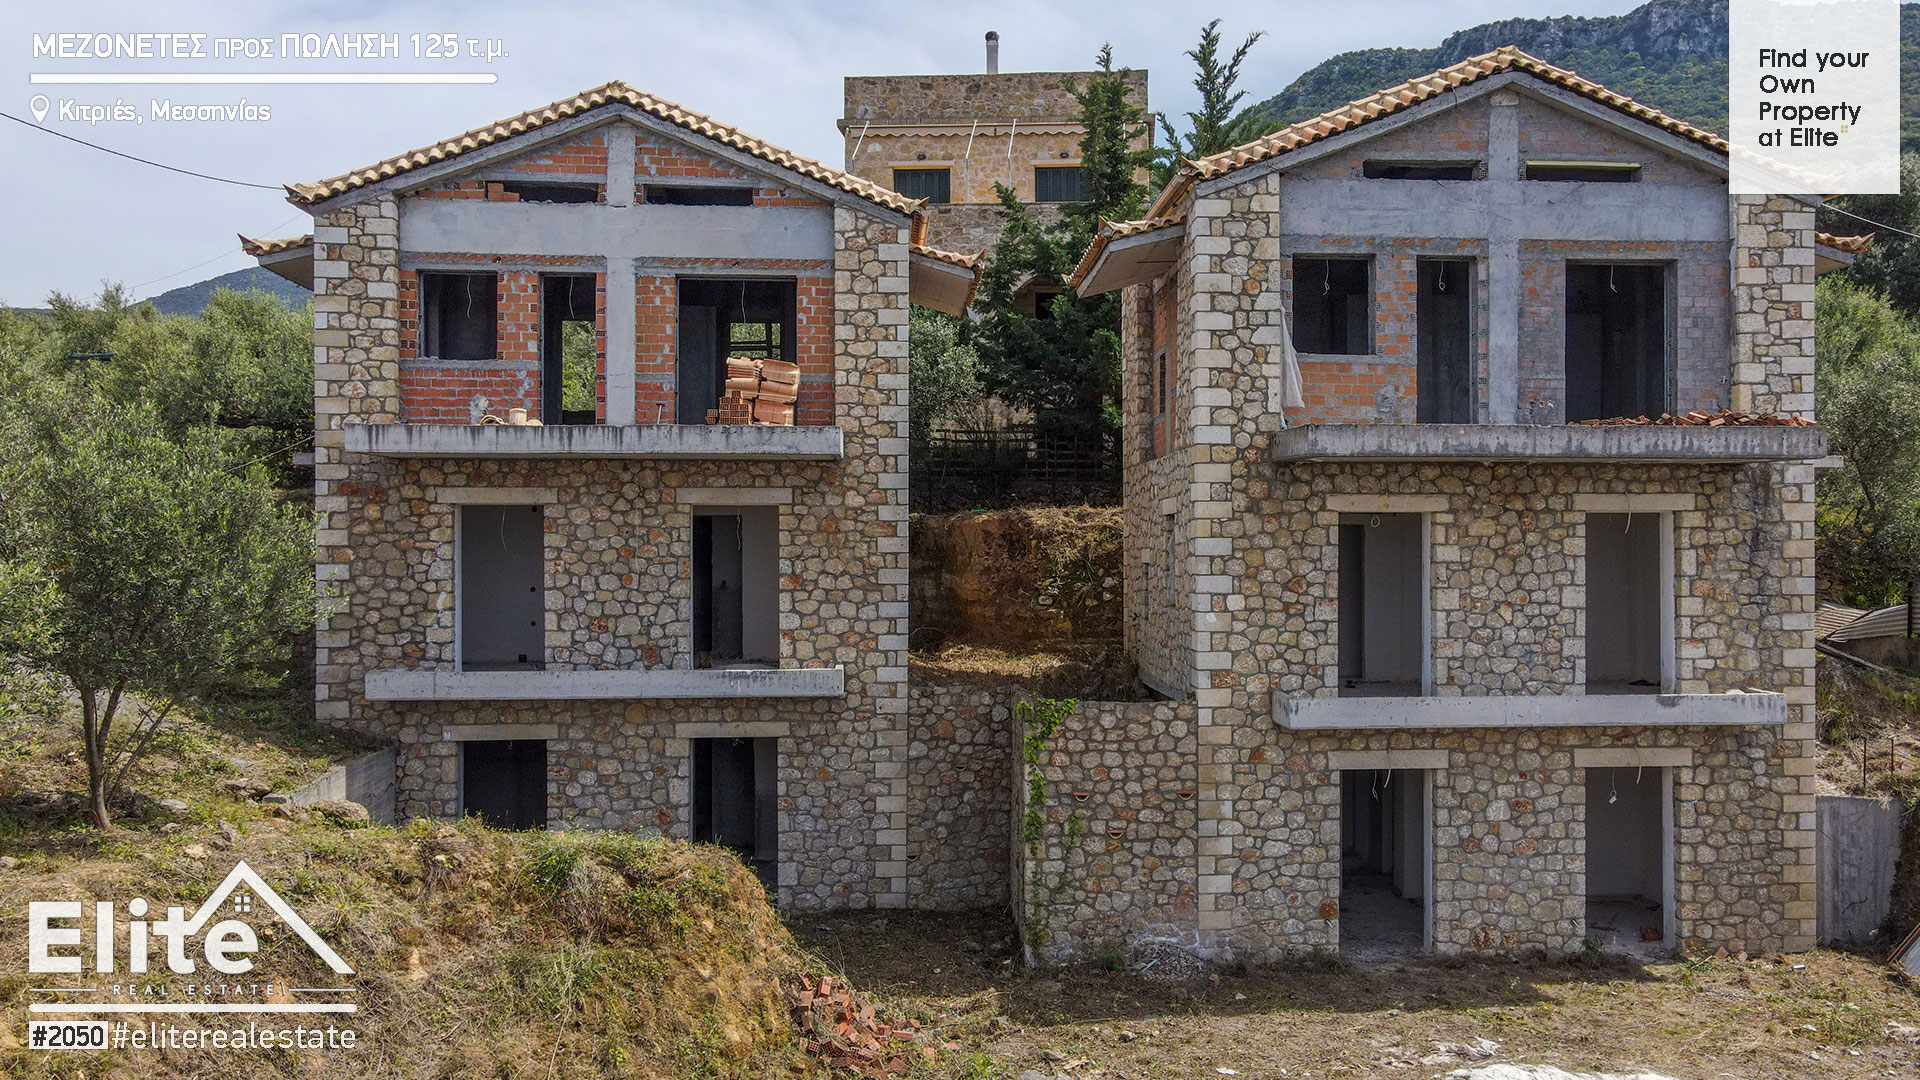 Sale of detached houses in Kitries (Avia) # 2050 | ELITE